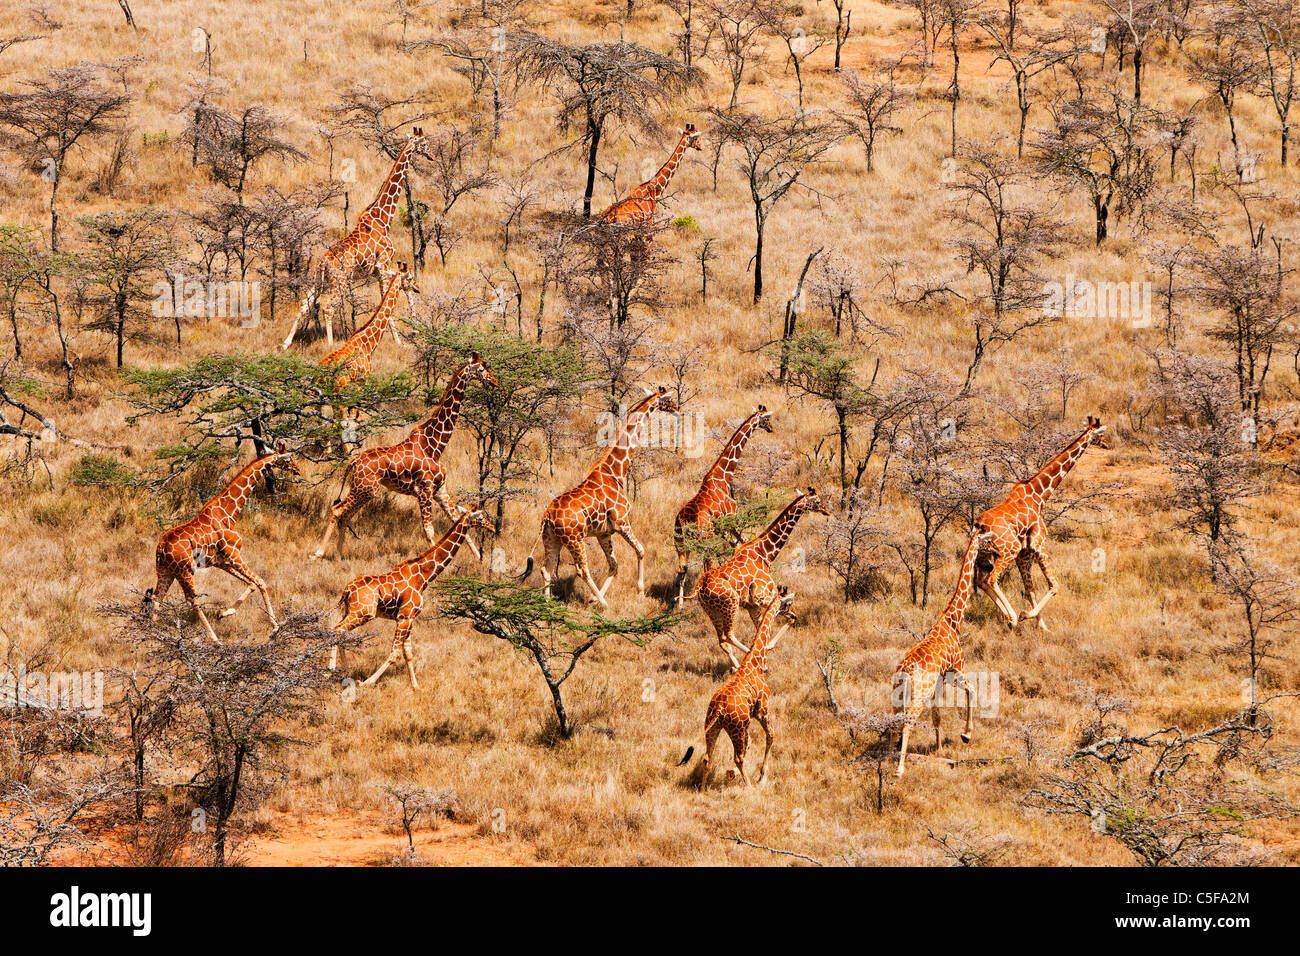 Aerial view of Reticulated Giraffe (Giraffa camelopardalis reticulata) in Kenya. Stock Photo